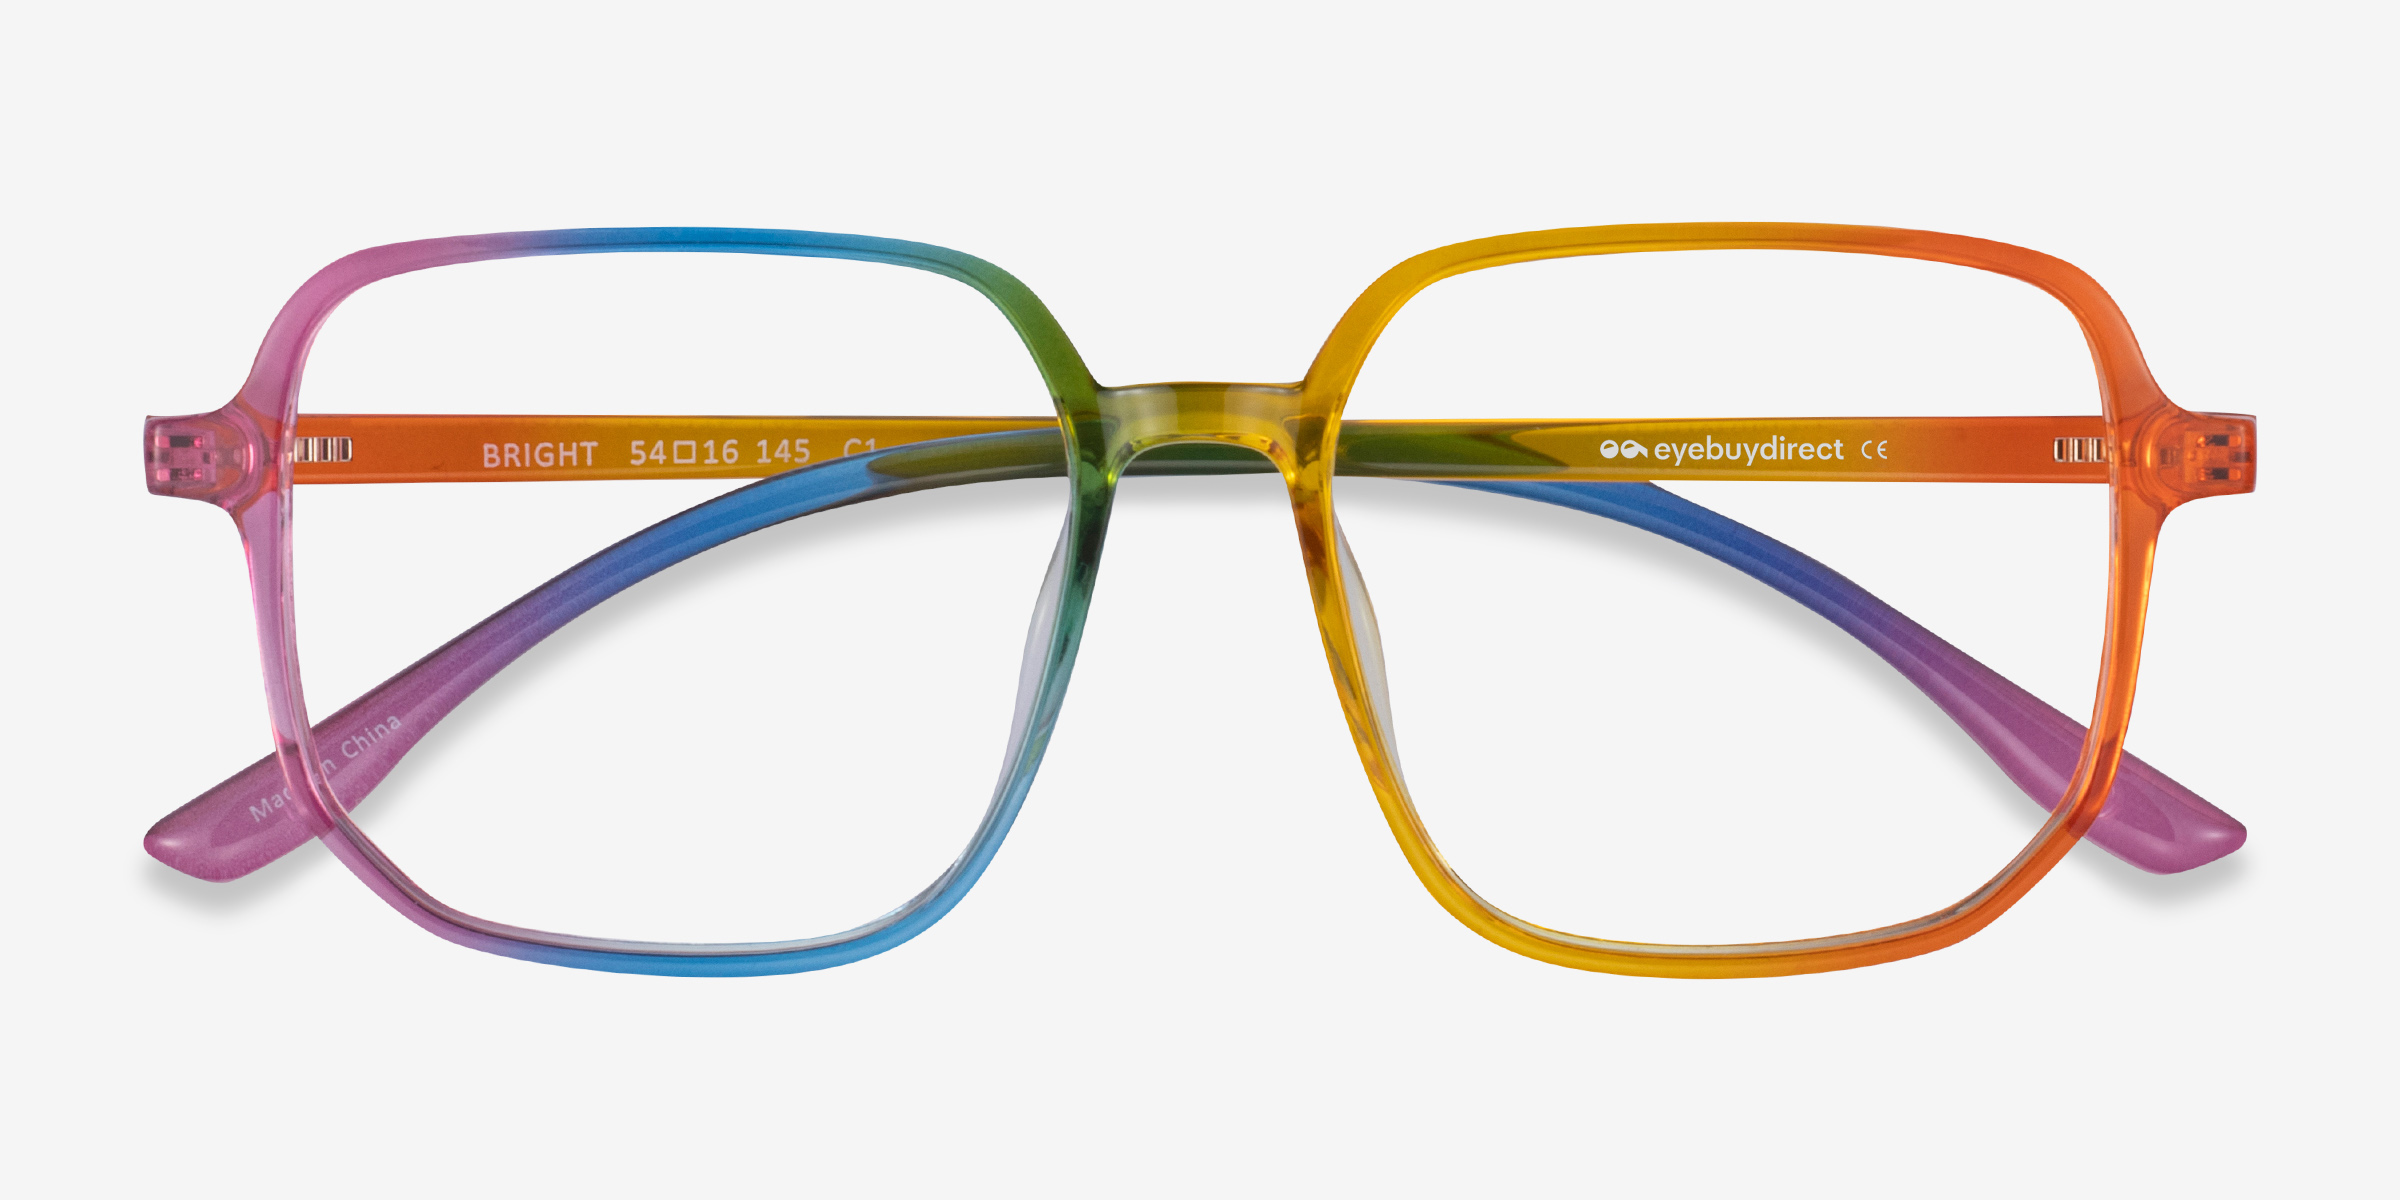 Bright Square Rainbow Full Rim Eyeglasses Eyebuydirect Canada 